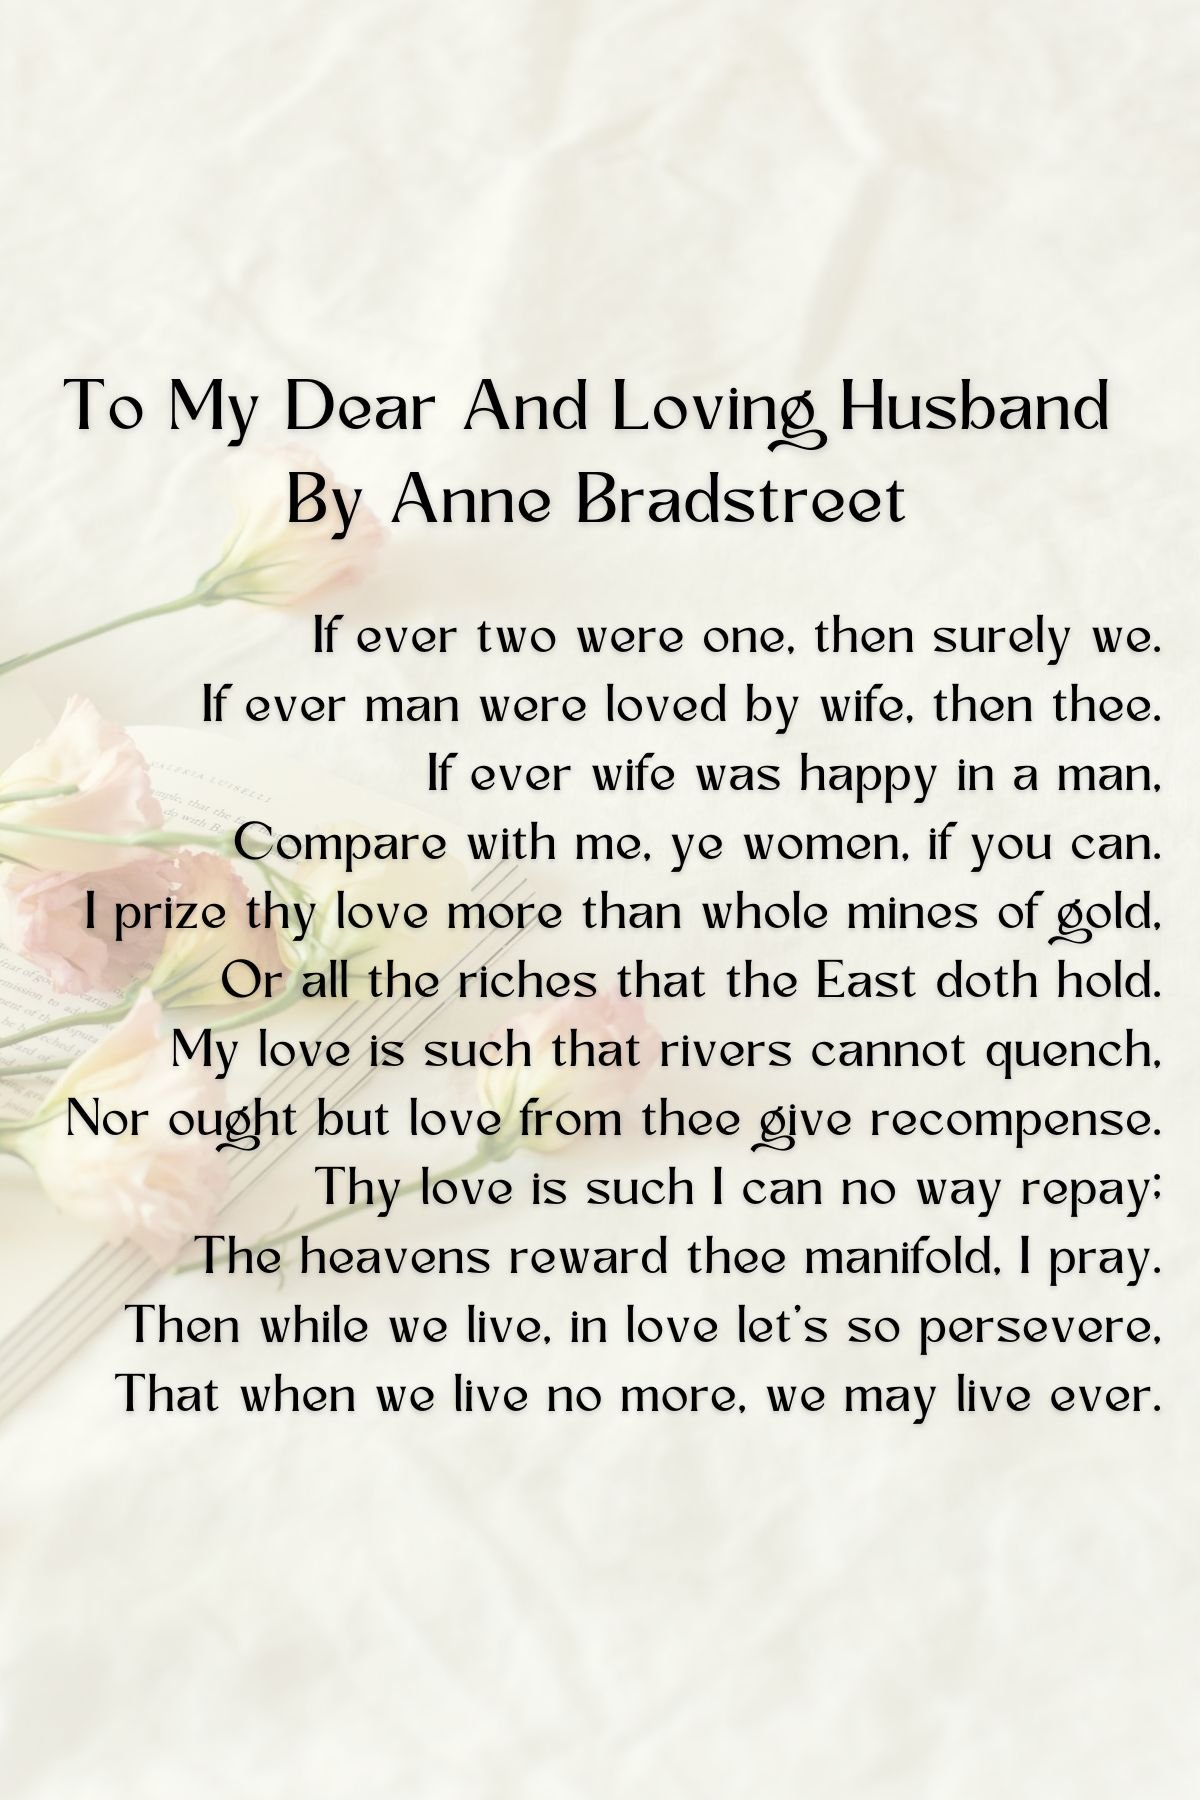 anne bradstreet loving husband poem